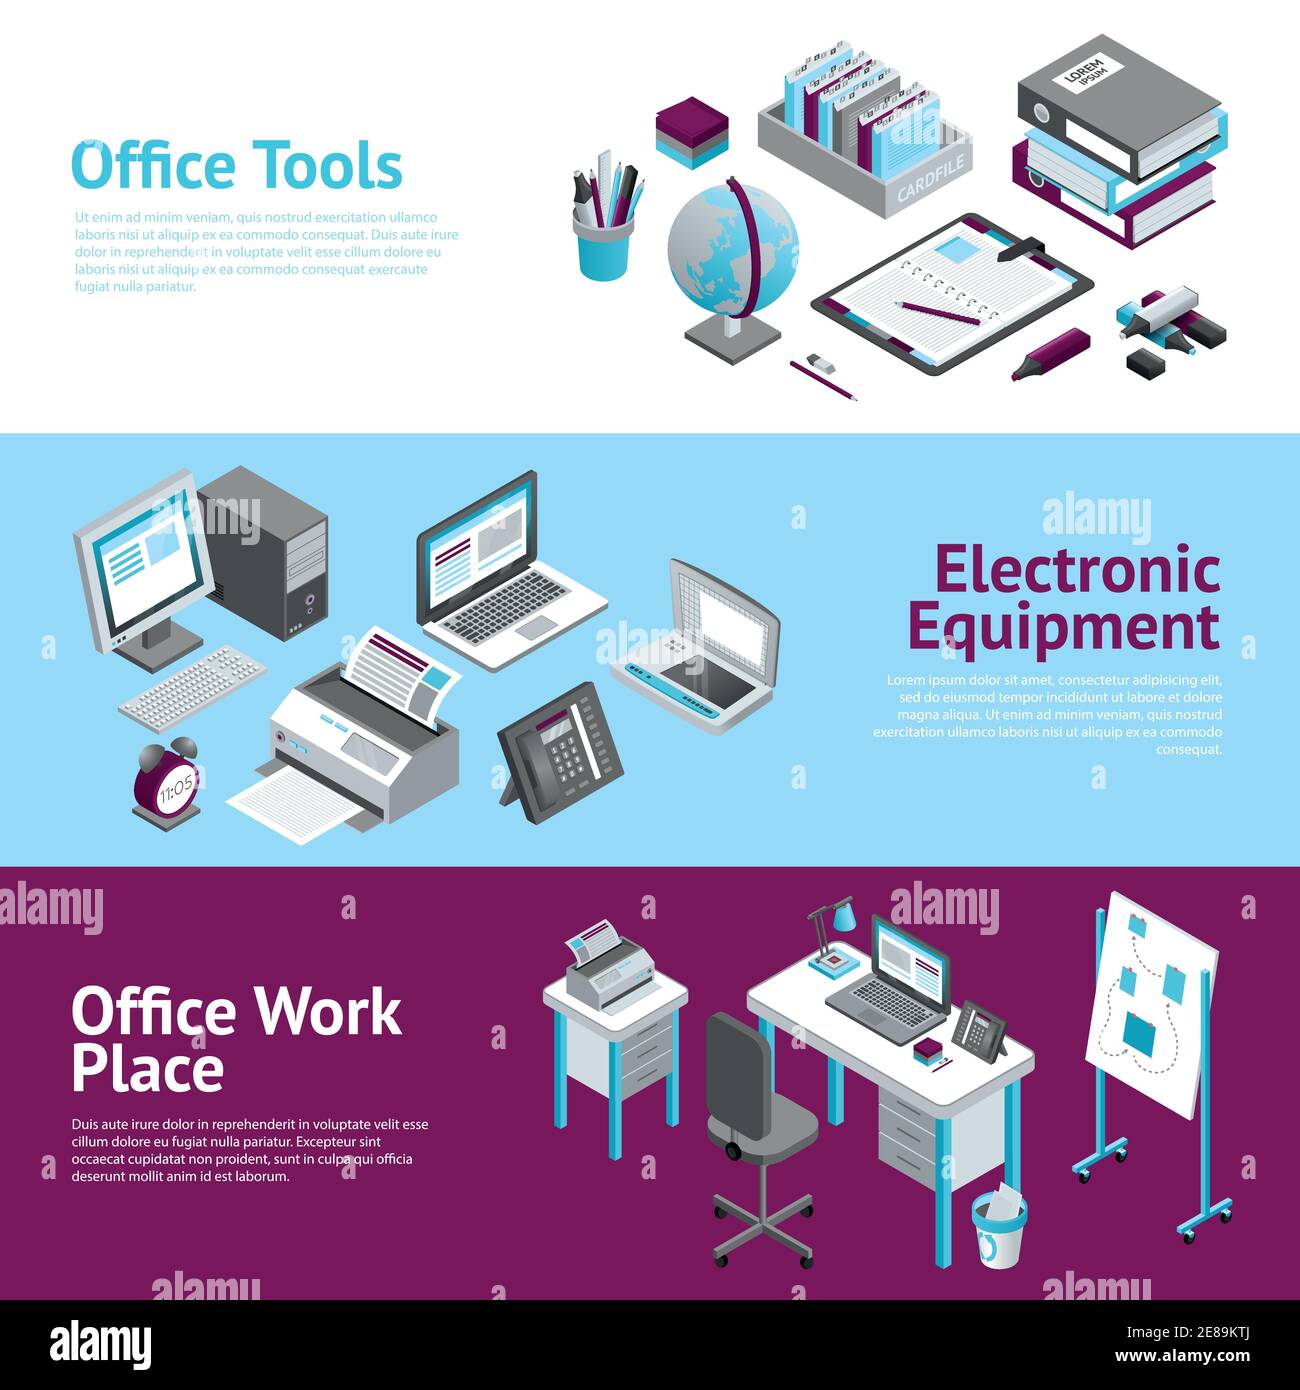 https://c8.alamy.com/comp/2E89KTJ/modern-office-workplace-desk-organizer-accessories-3-flat-horizontal-banners-set-with-agenda-planner-abstract-vector-illustration-2E89KTJ.jpg